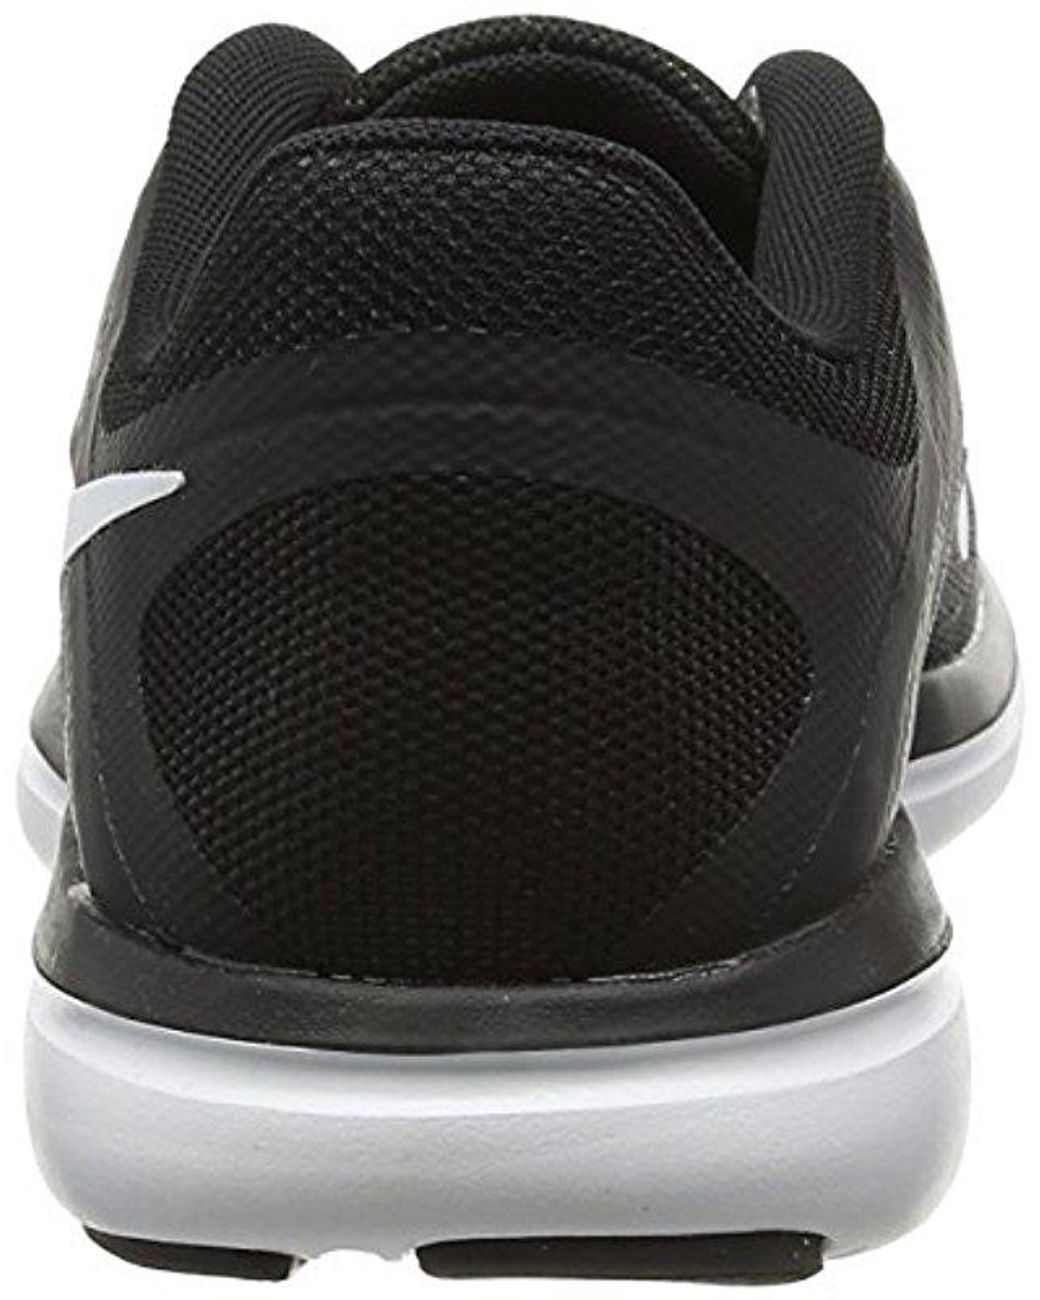 Nike Flex 2016 Rn Running Shoes in Black/White/Cool Grey (Black) | Lyst